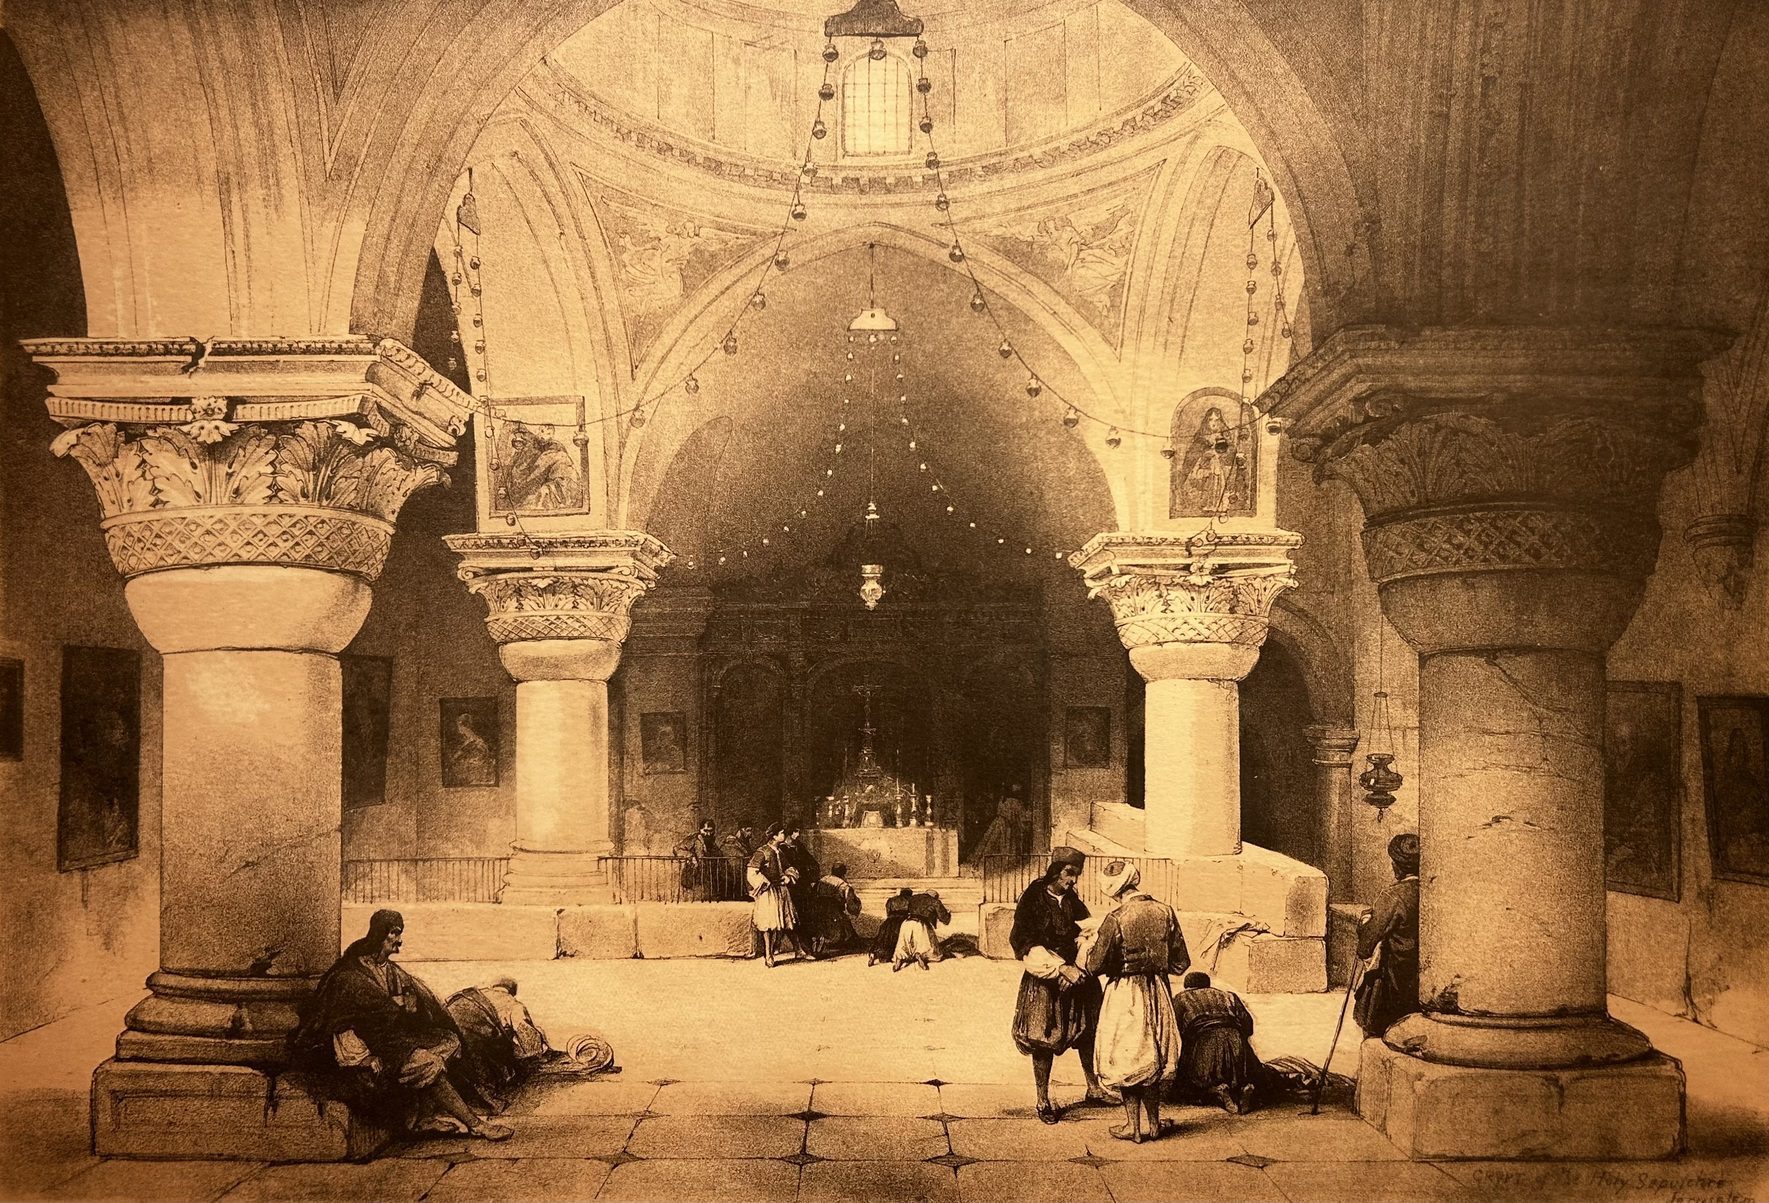 49 x 36 cm - Crypt of the Holy Sepulchre Jerusalem